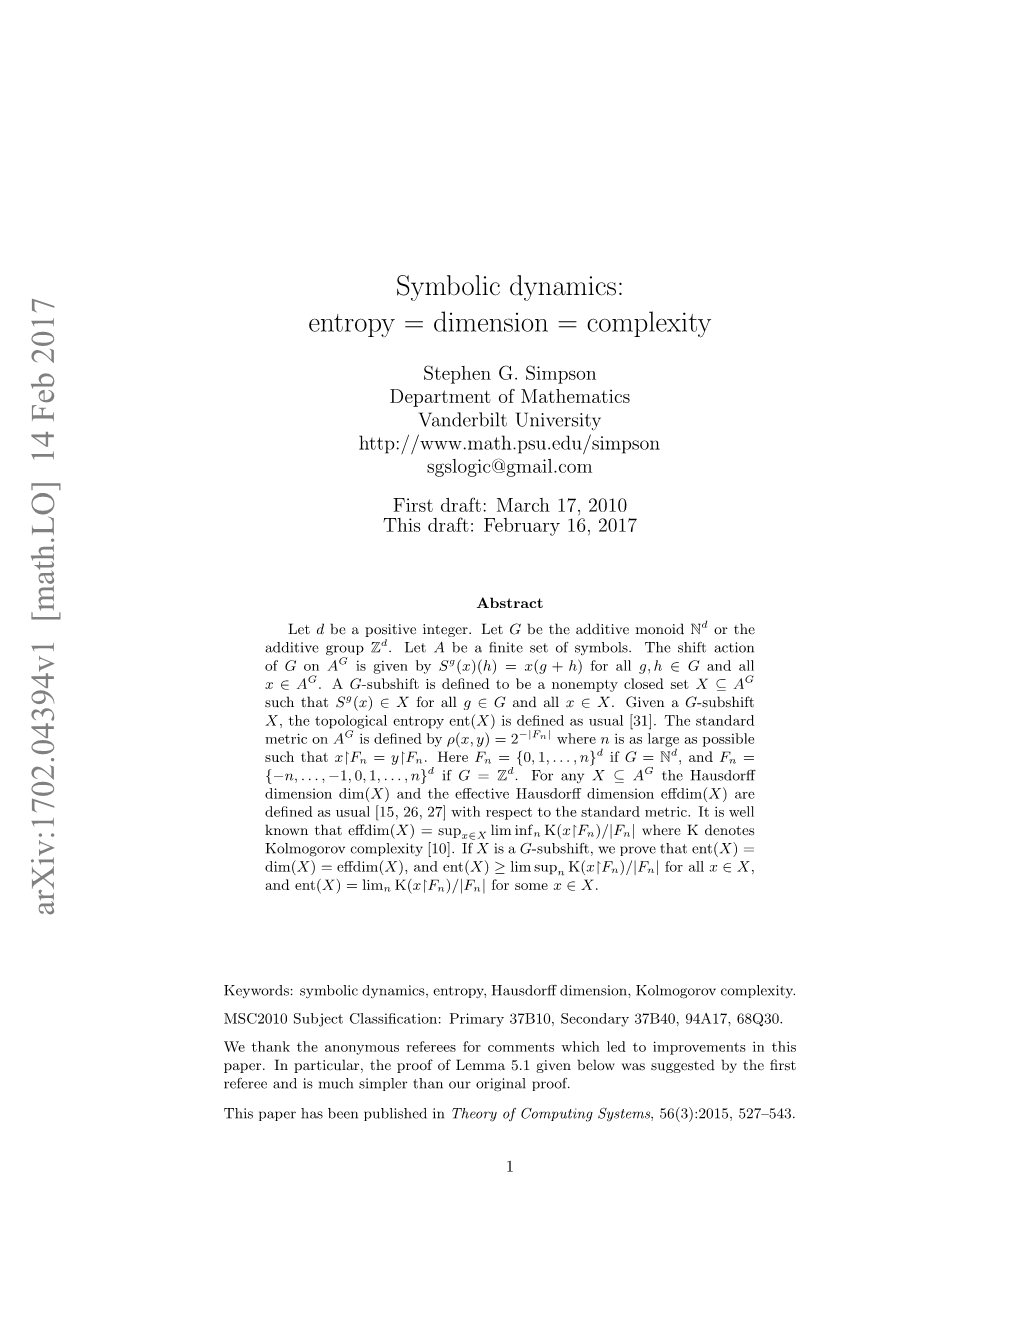 Symbolic Dynamics: Entropy = Dimension = Complexity